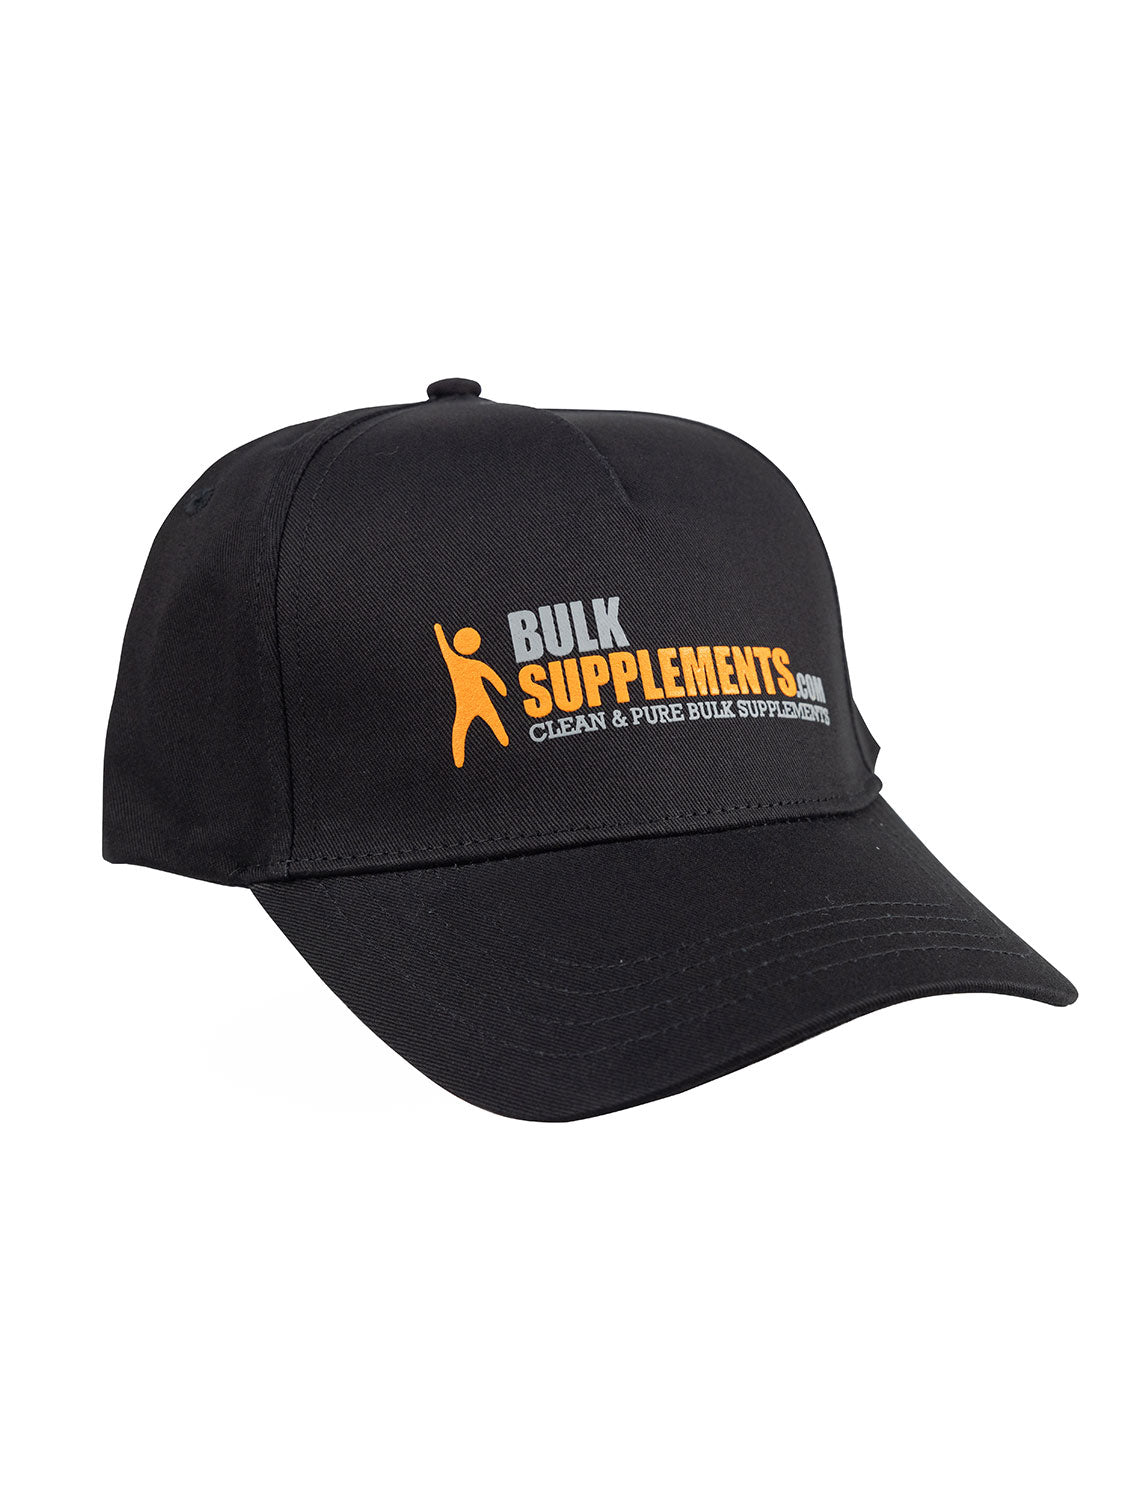 Bulksupplements Black Hat